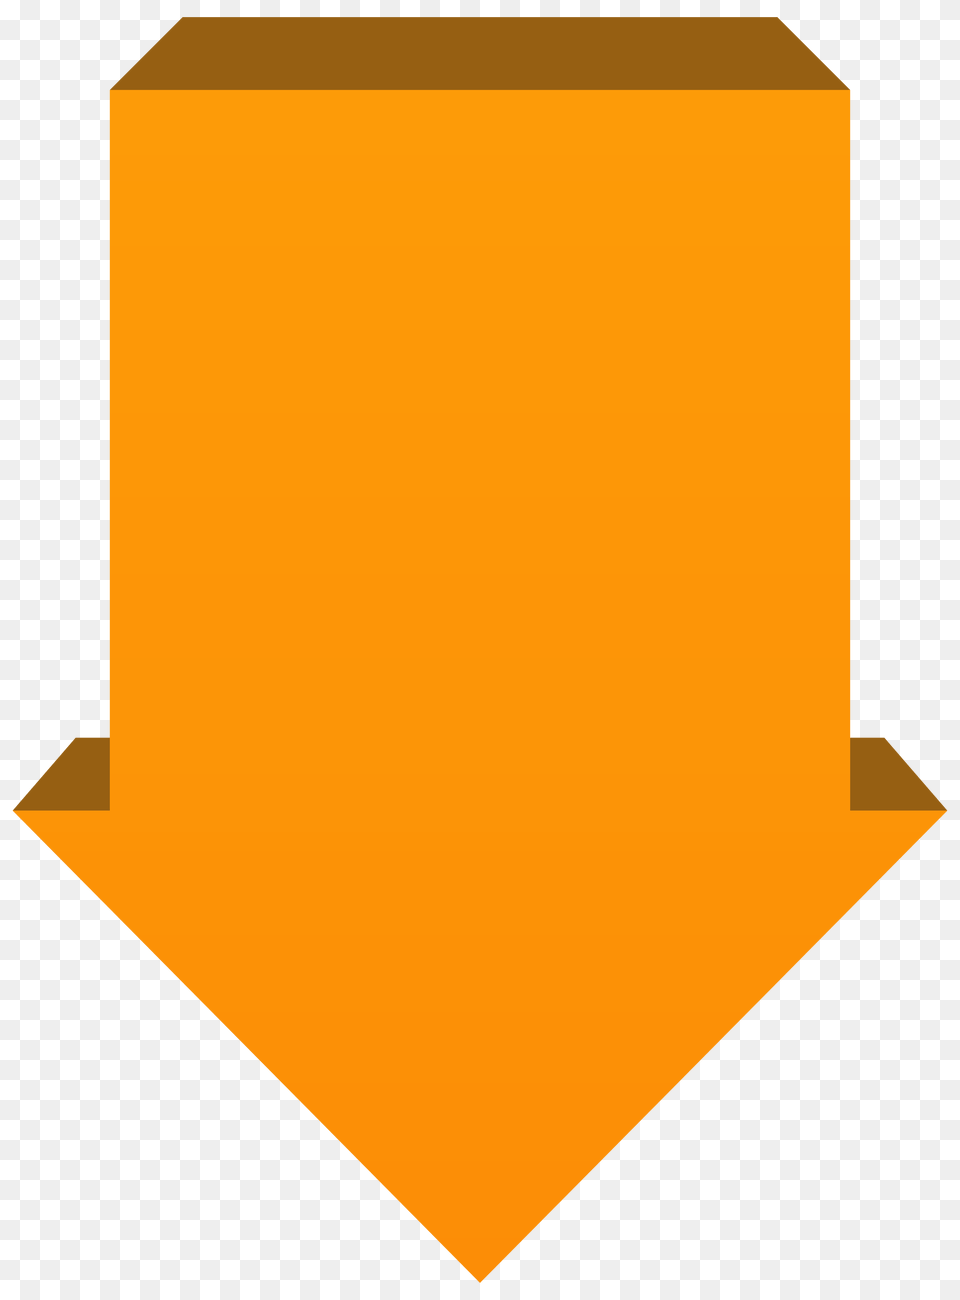 Orange Arrow Clip Art Full Size Download Seekpng Orange Arrow Down Free Transparent Png